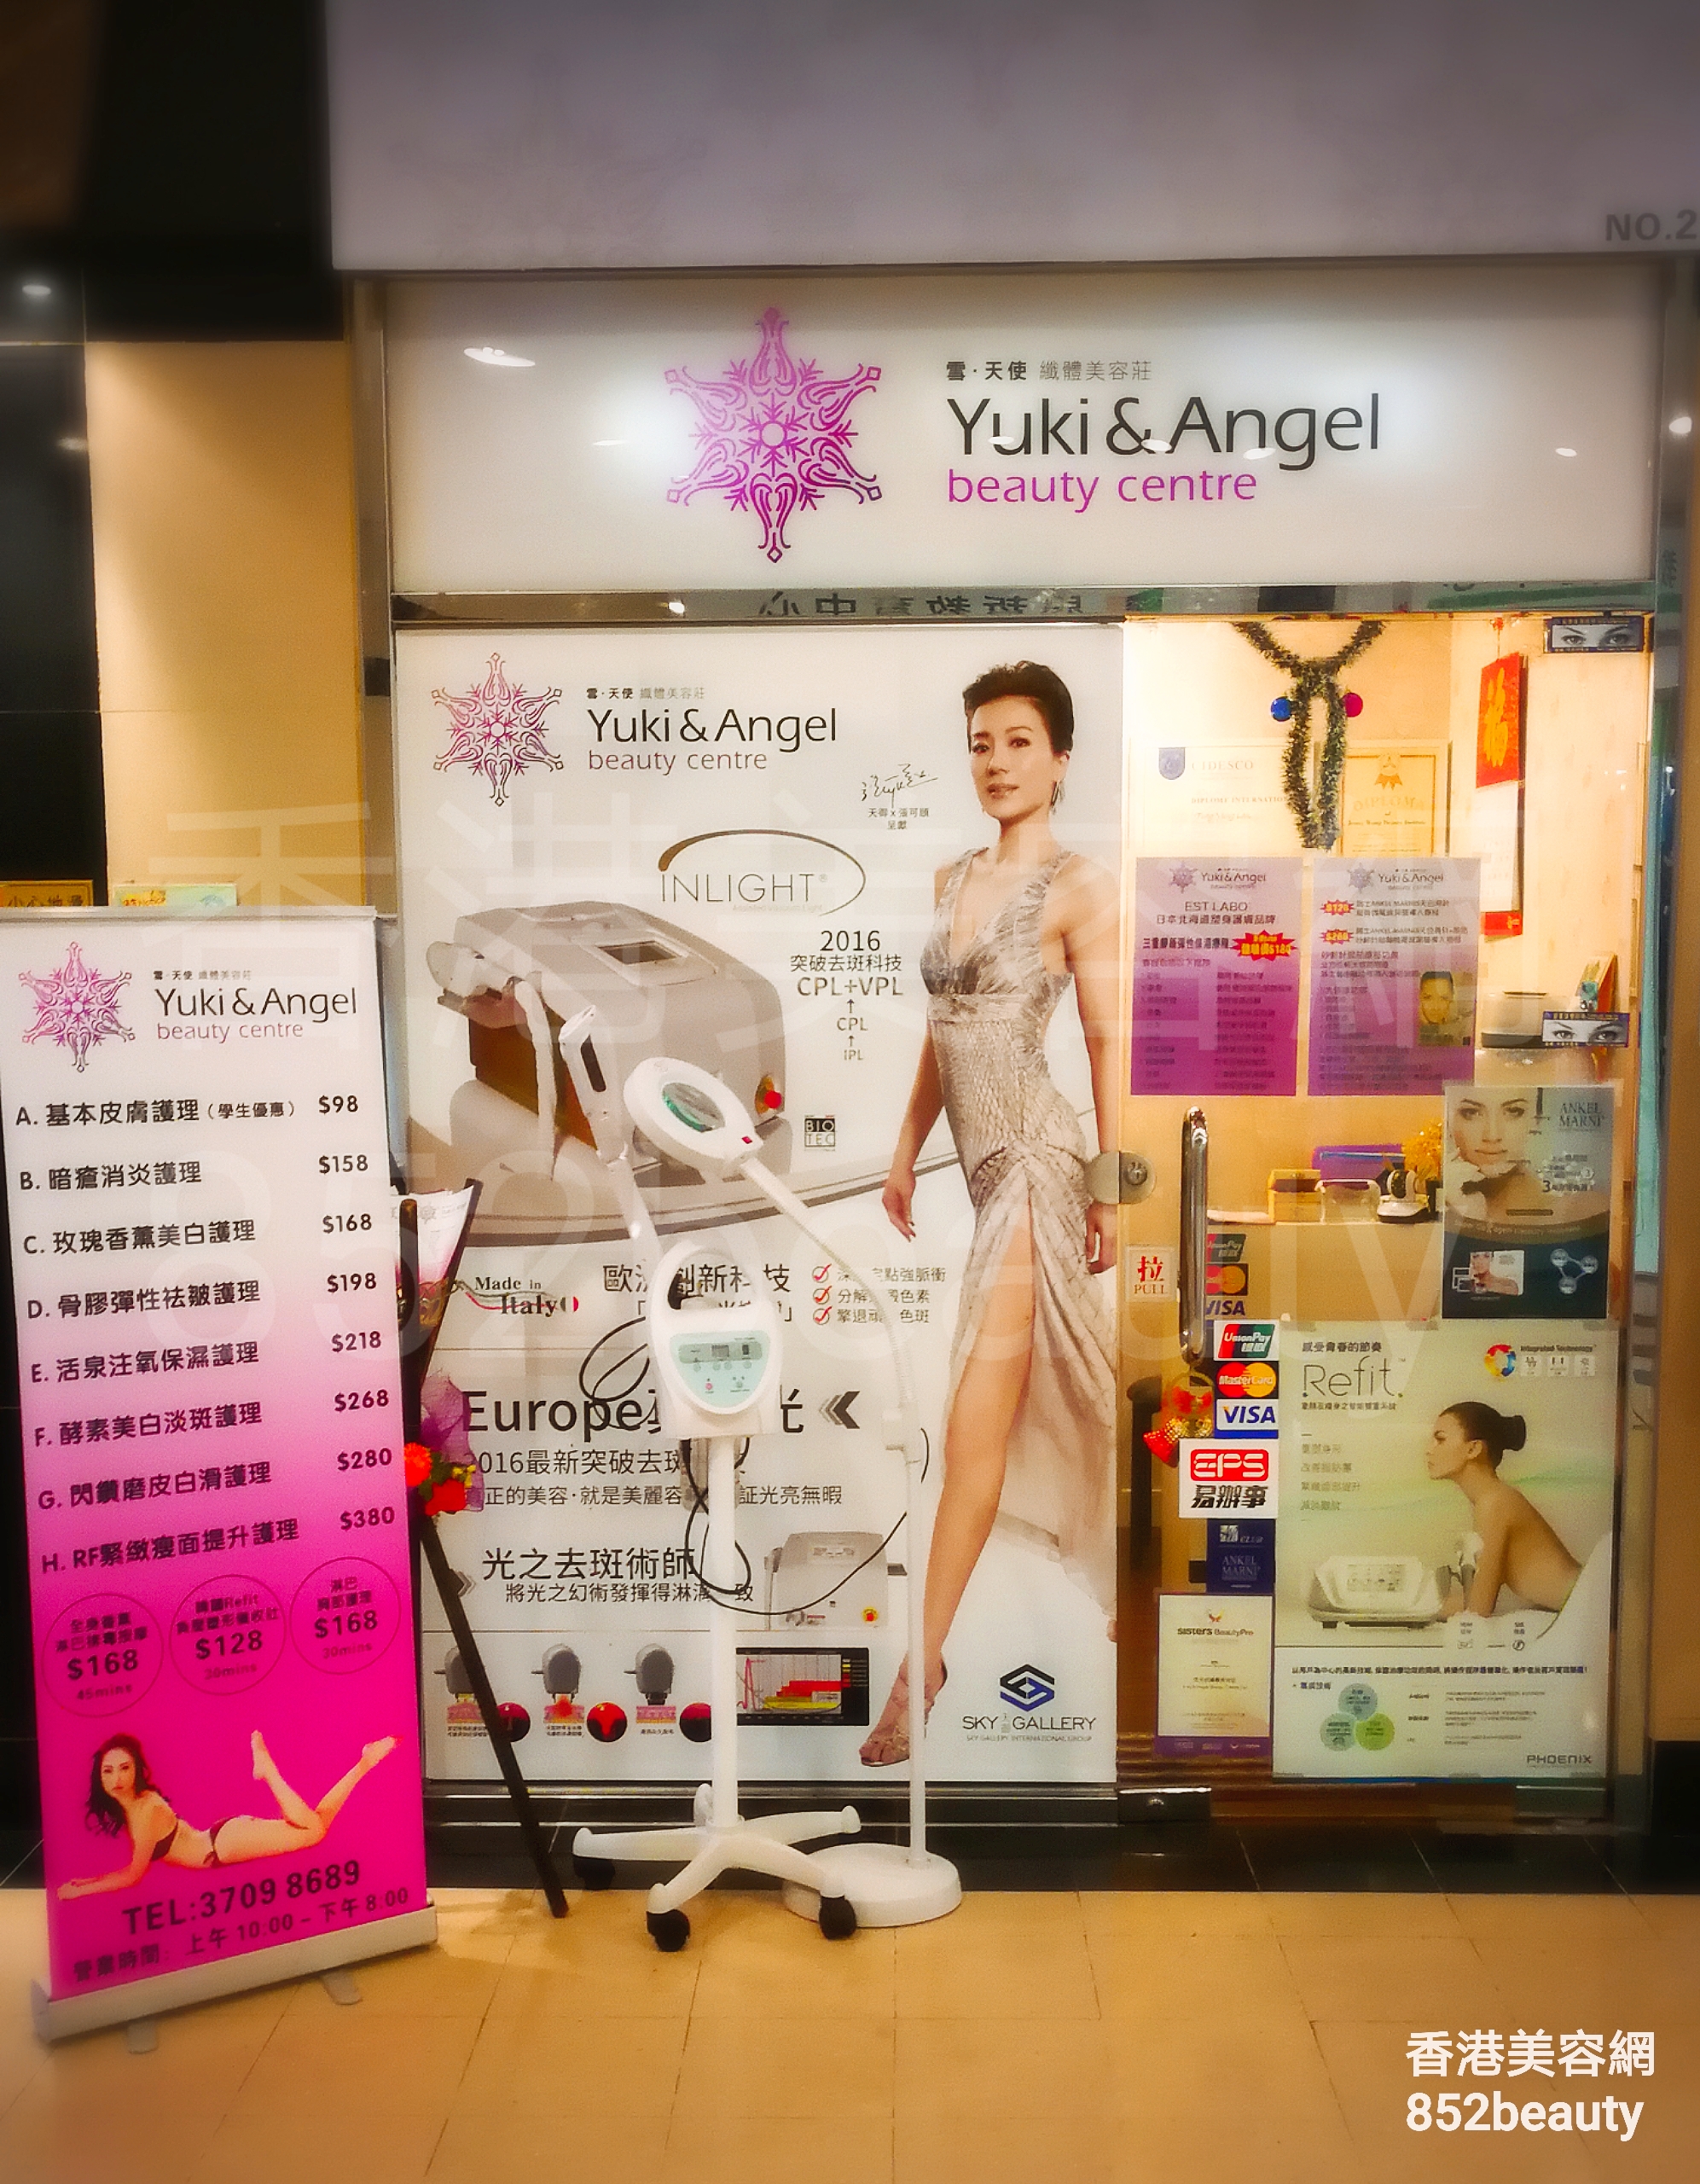 纤体瘦身: Yuki & Angel beauty centre